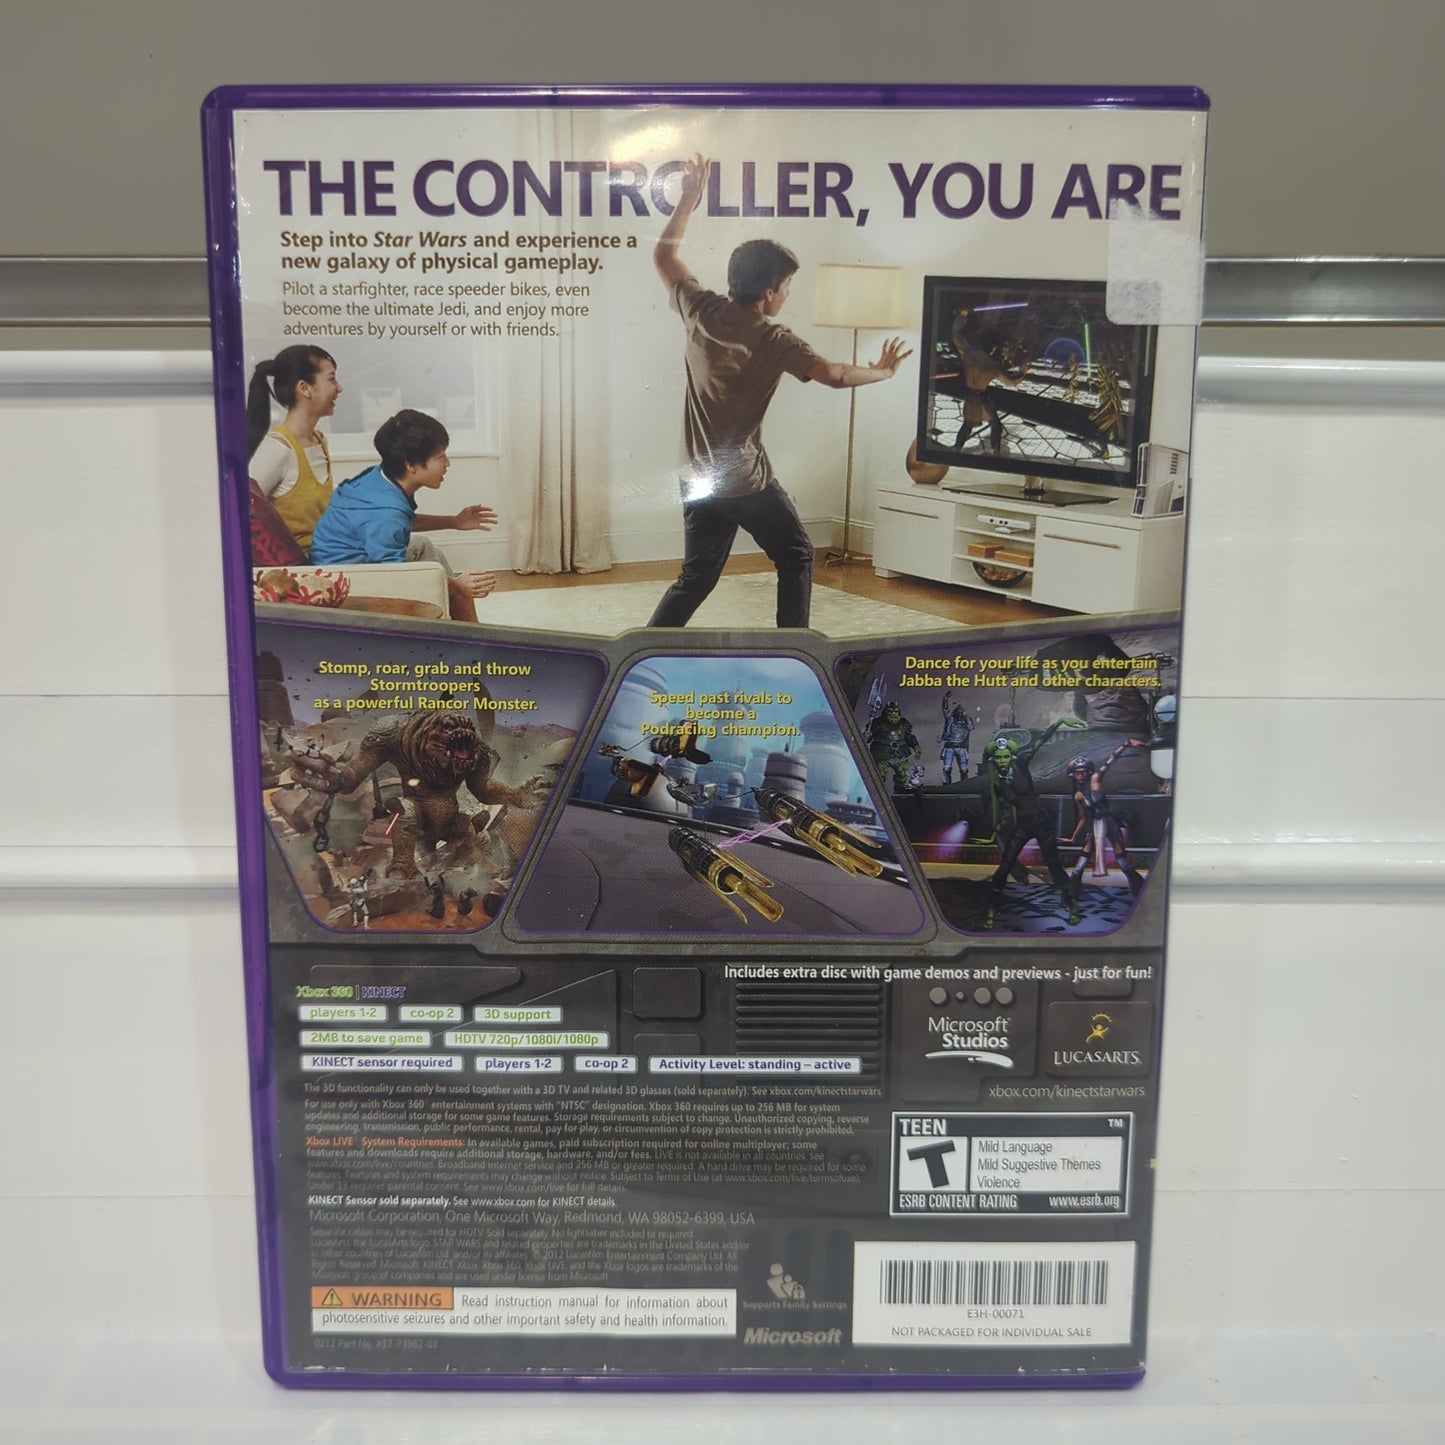 Kinect Star Wars - Xbox 360